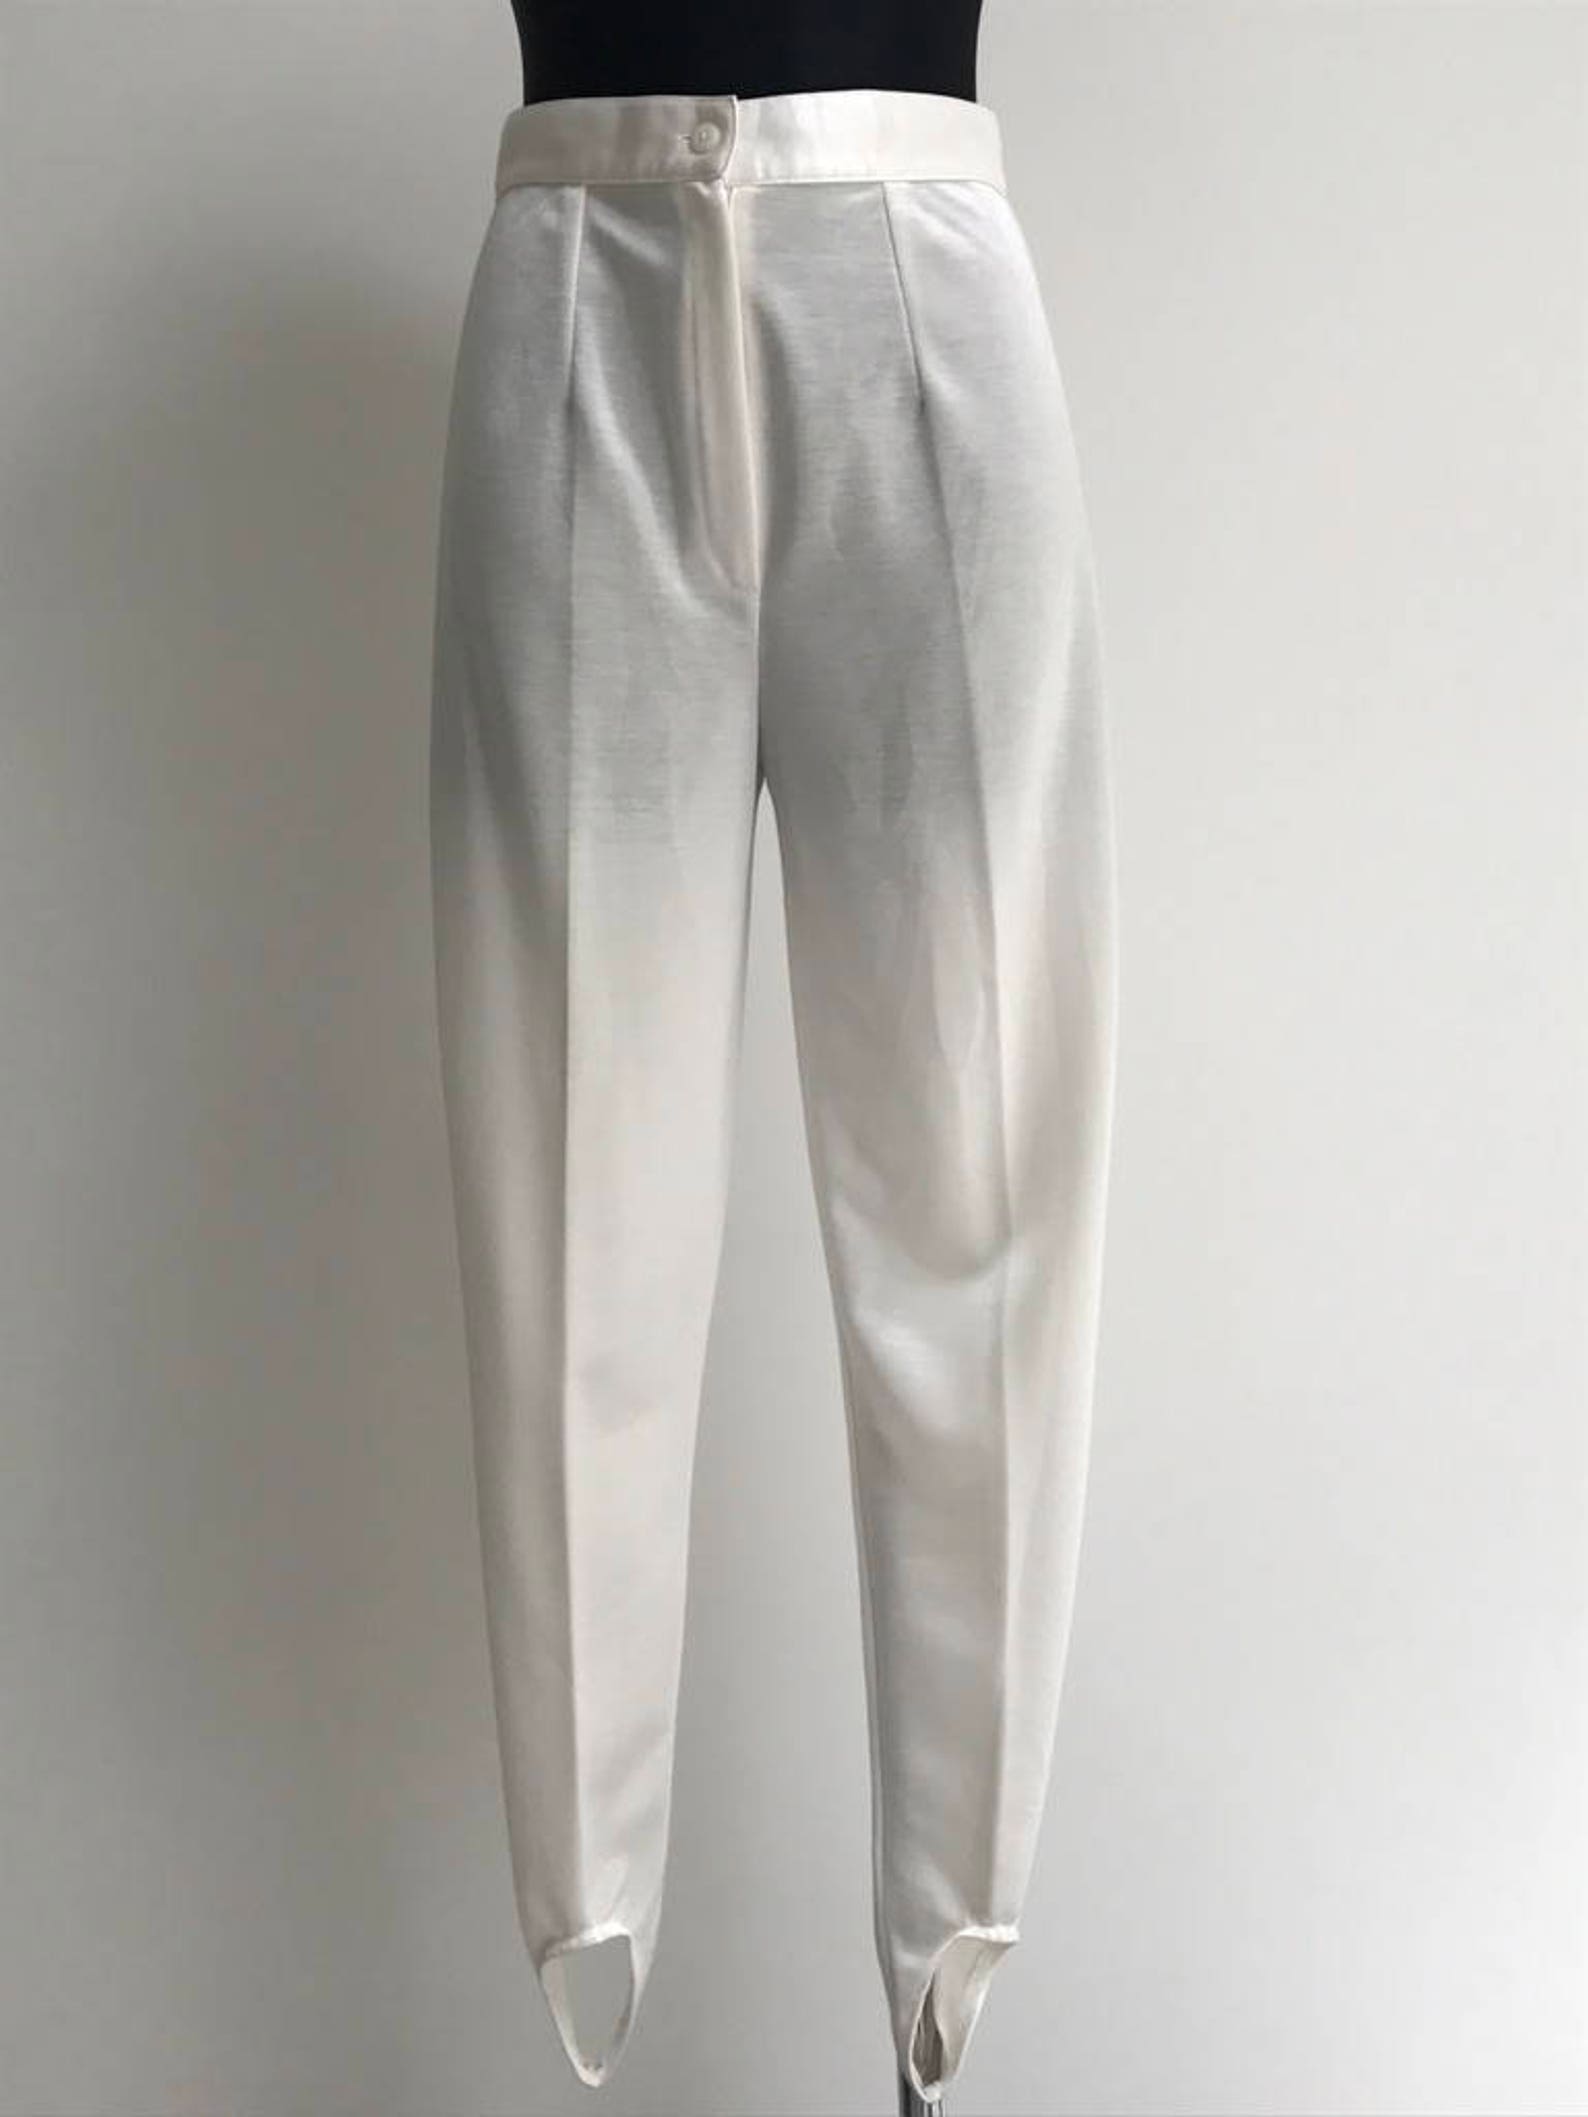 80s White Stirrup Pants High Rise Pants Shiny 1980s Minimal | Etsy